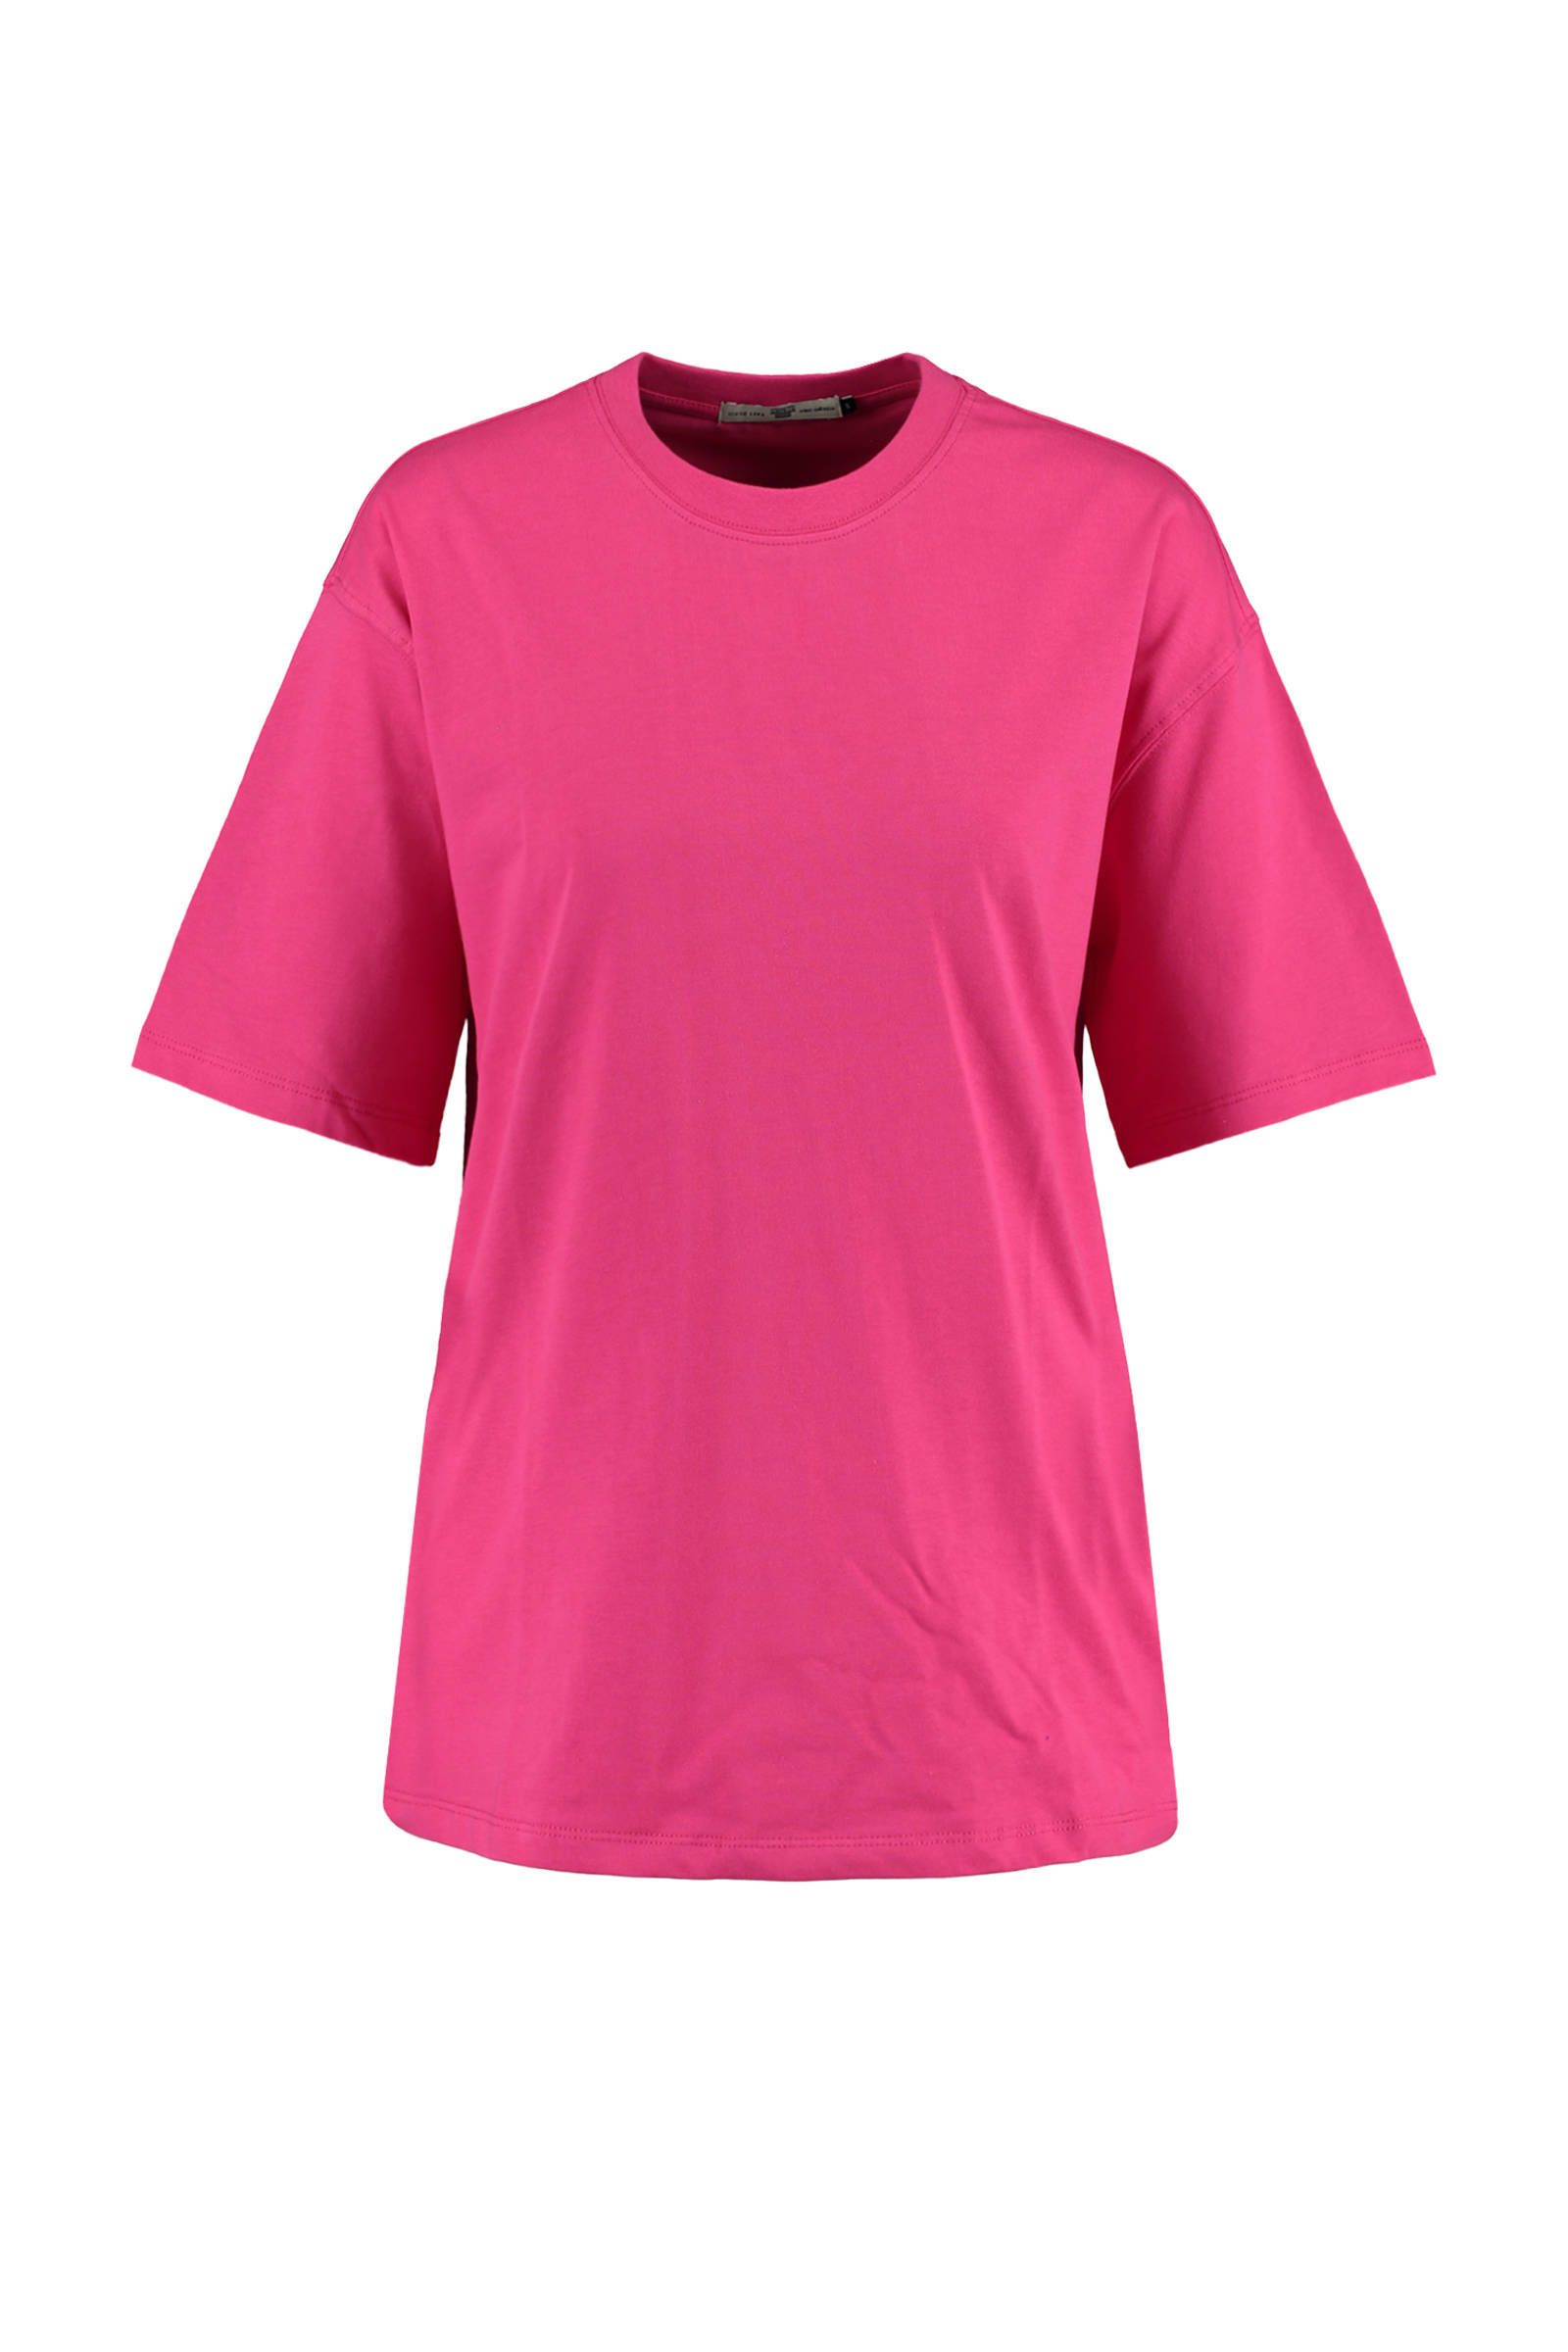 America Today Dames T shirt Oversized Roze online kopen